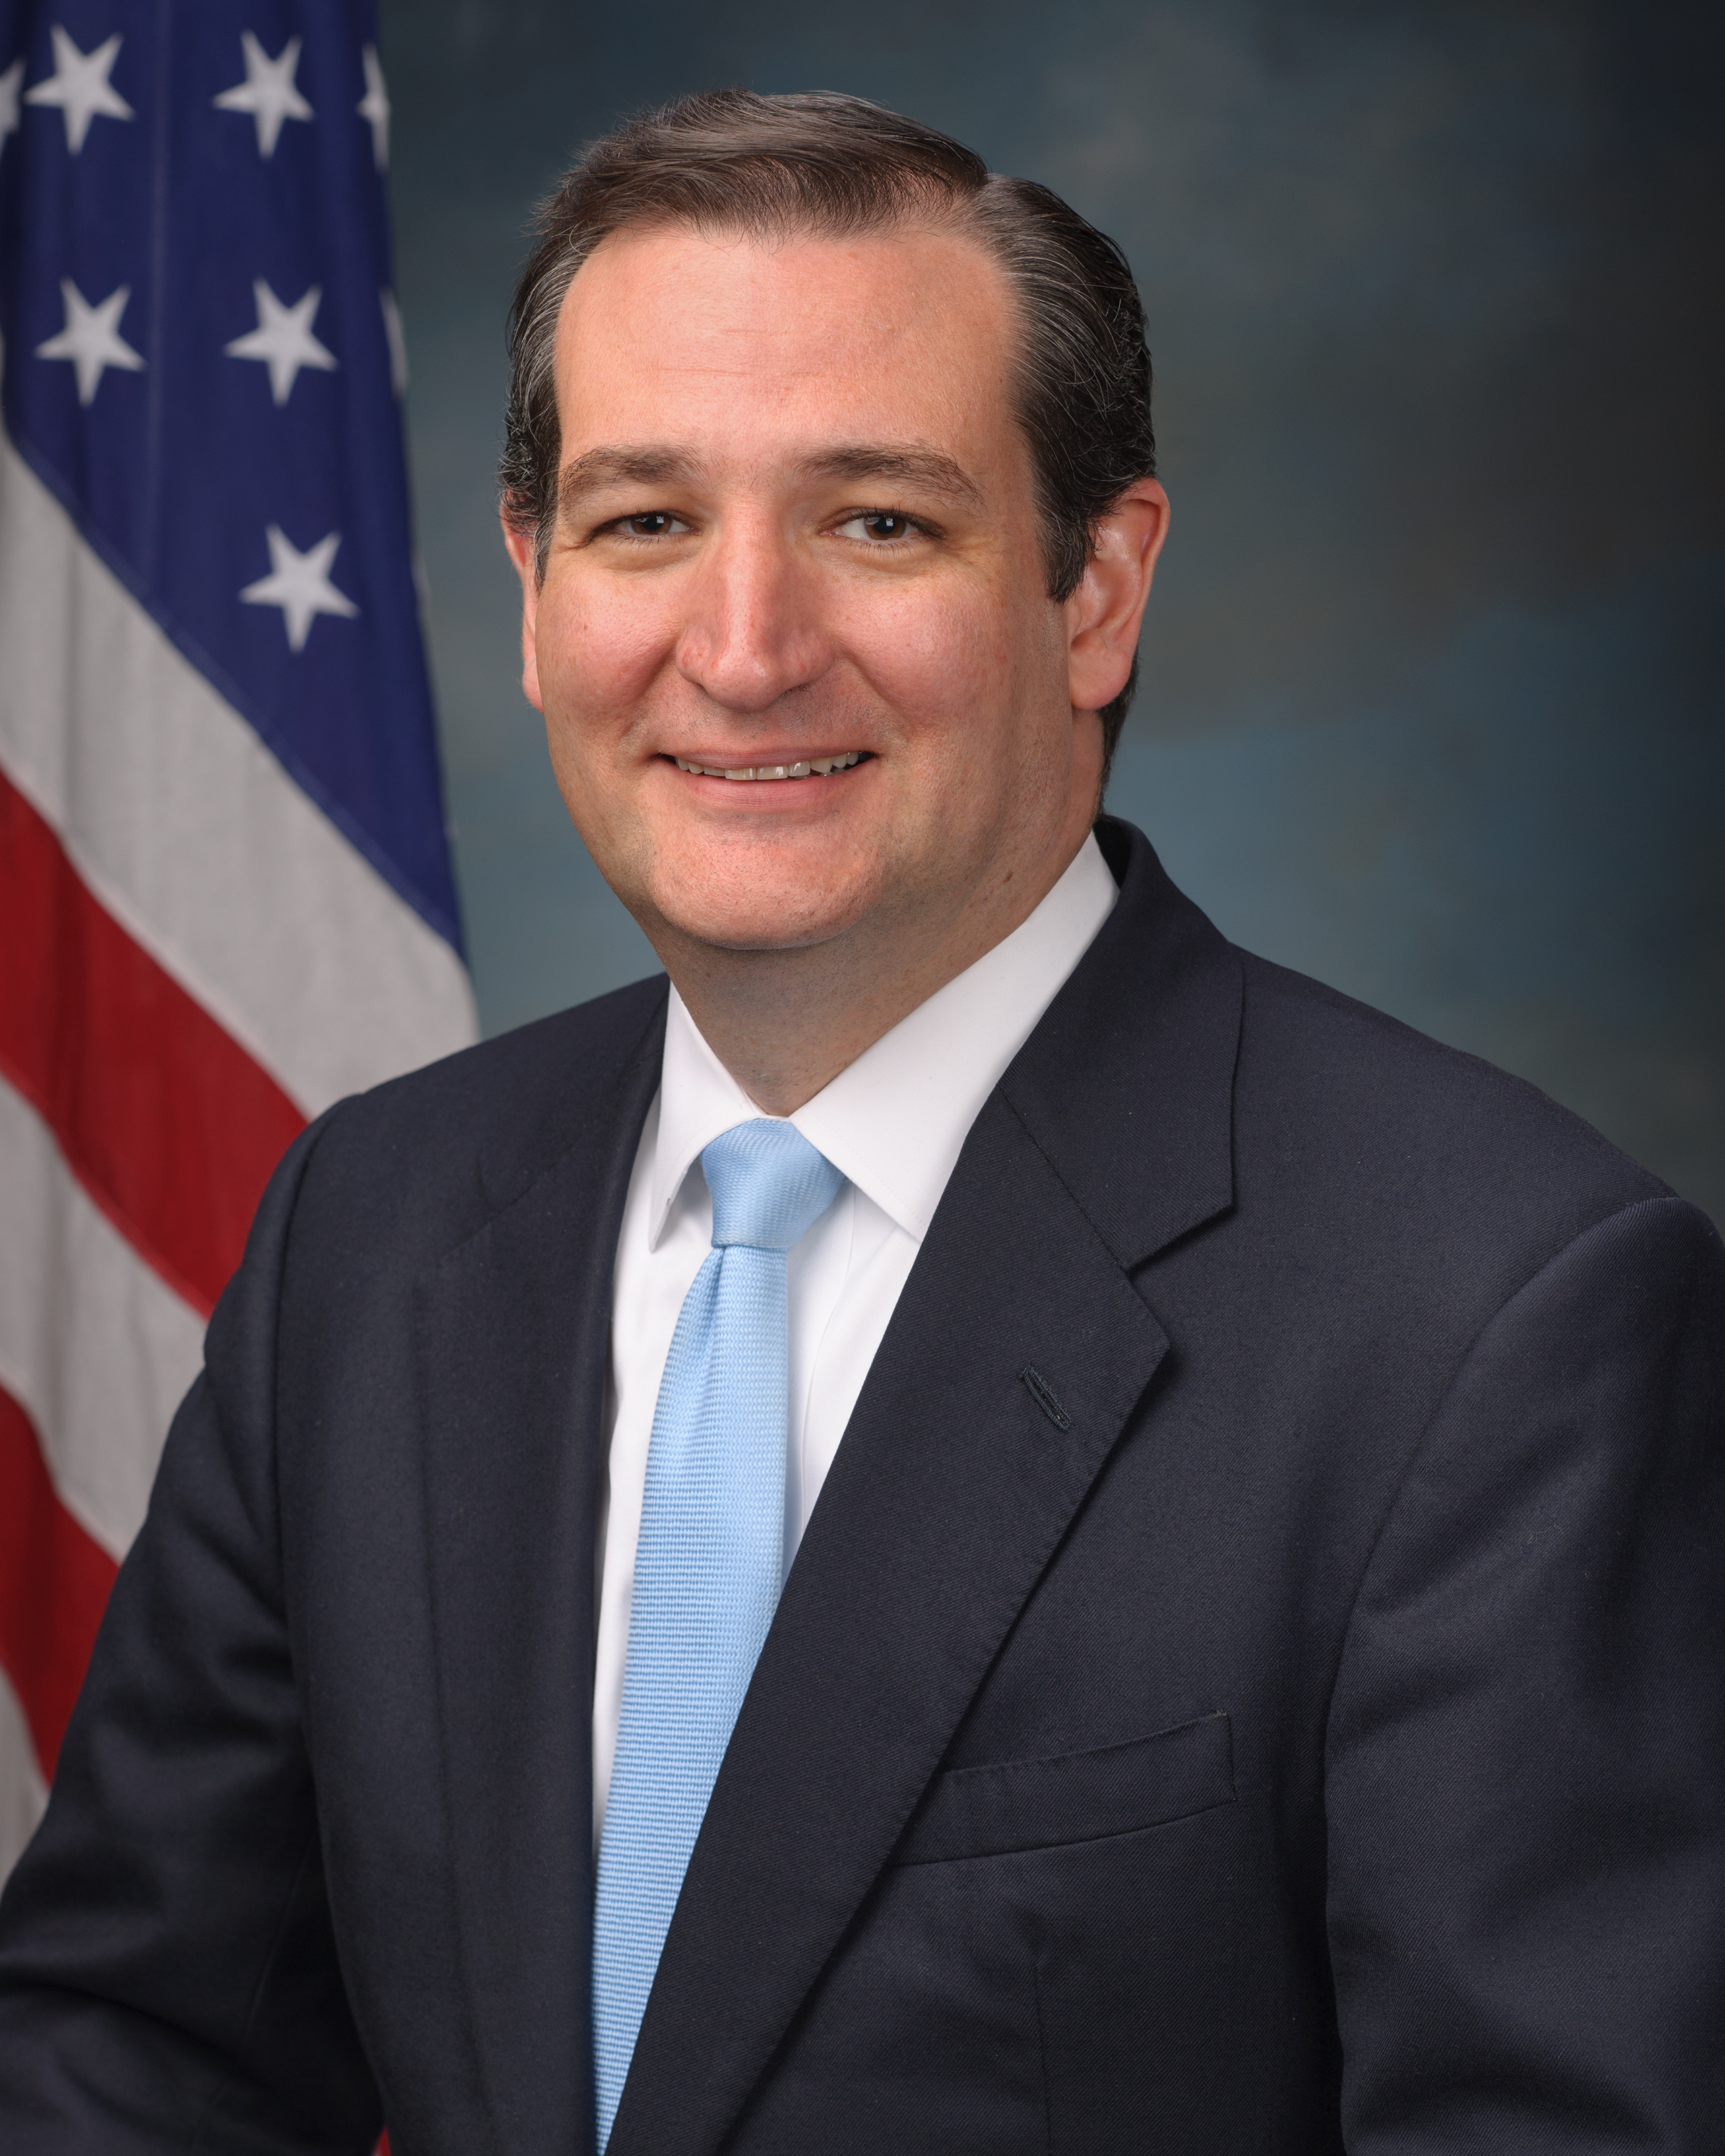 Ted Cruz official portrait 113th Congress